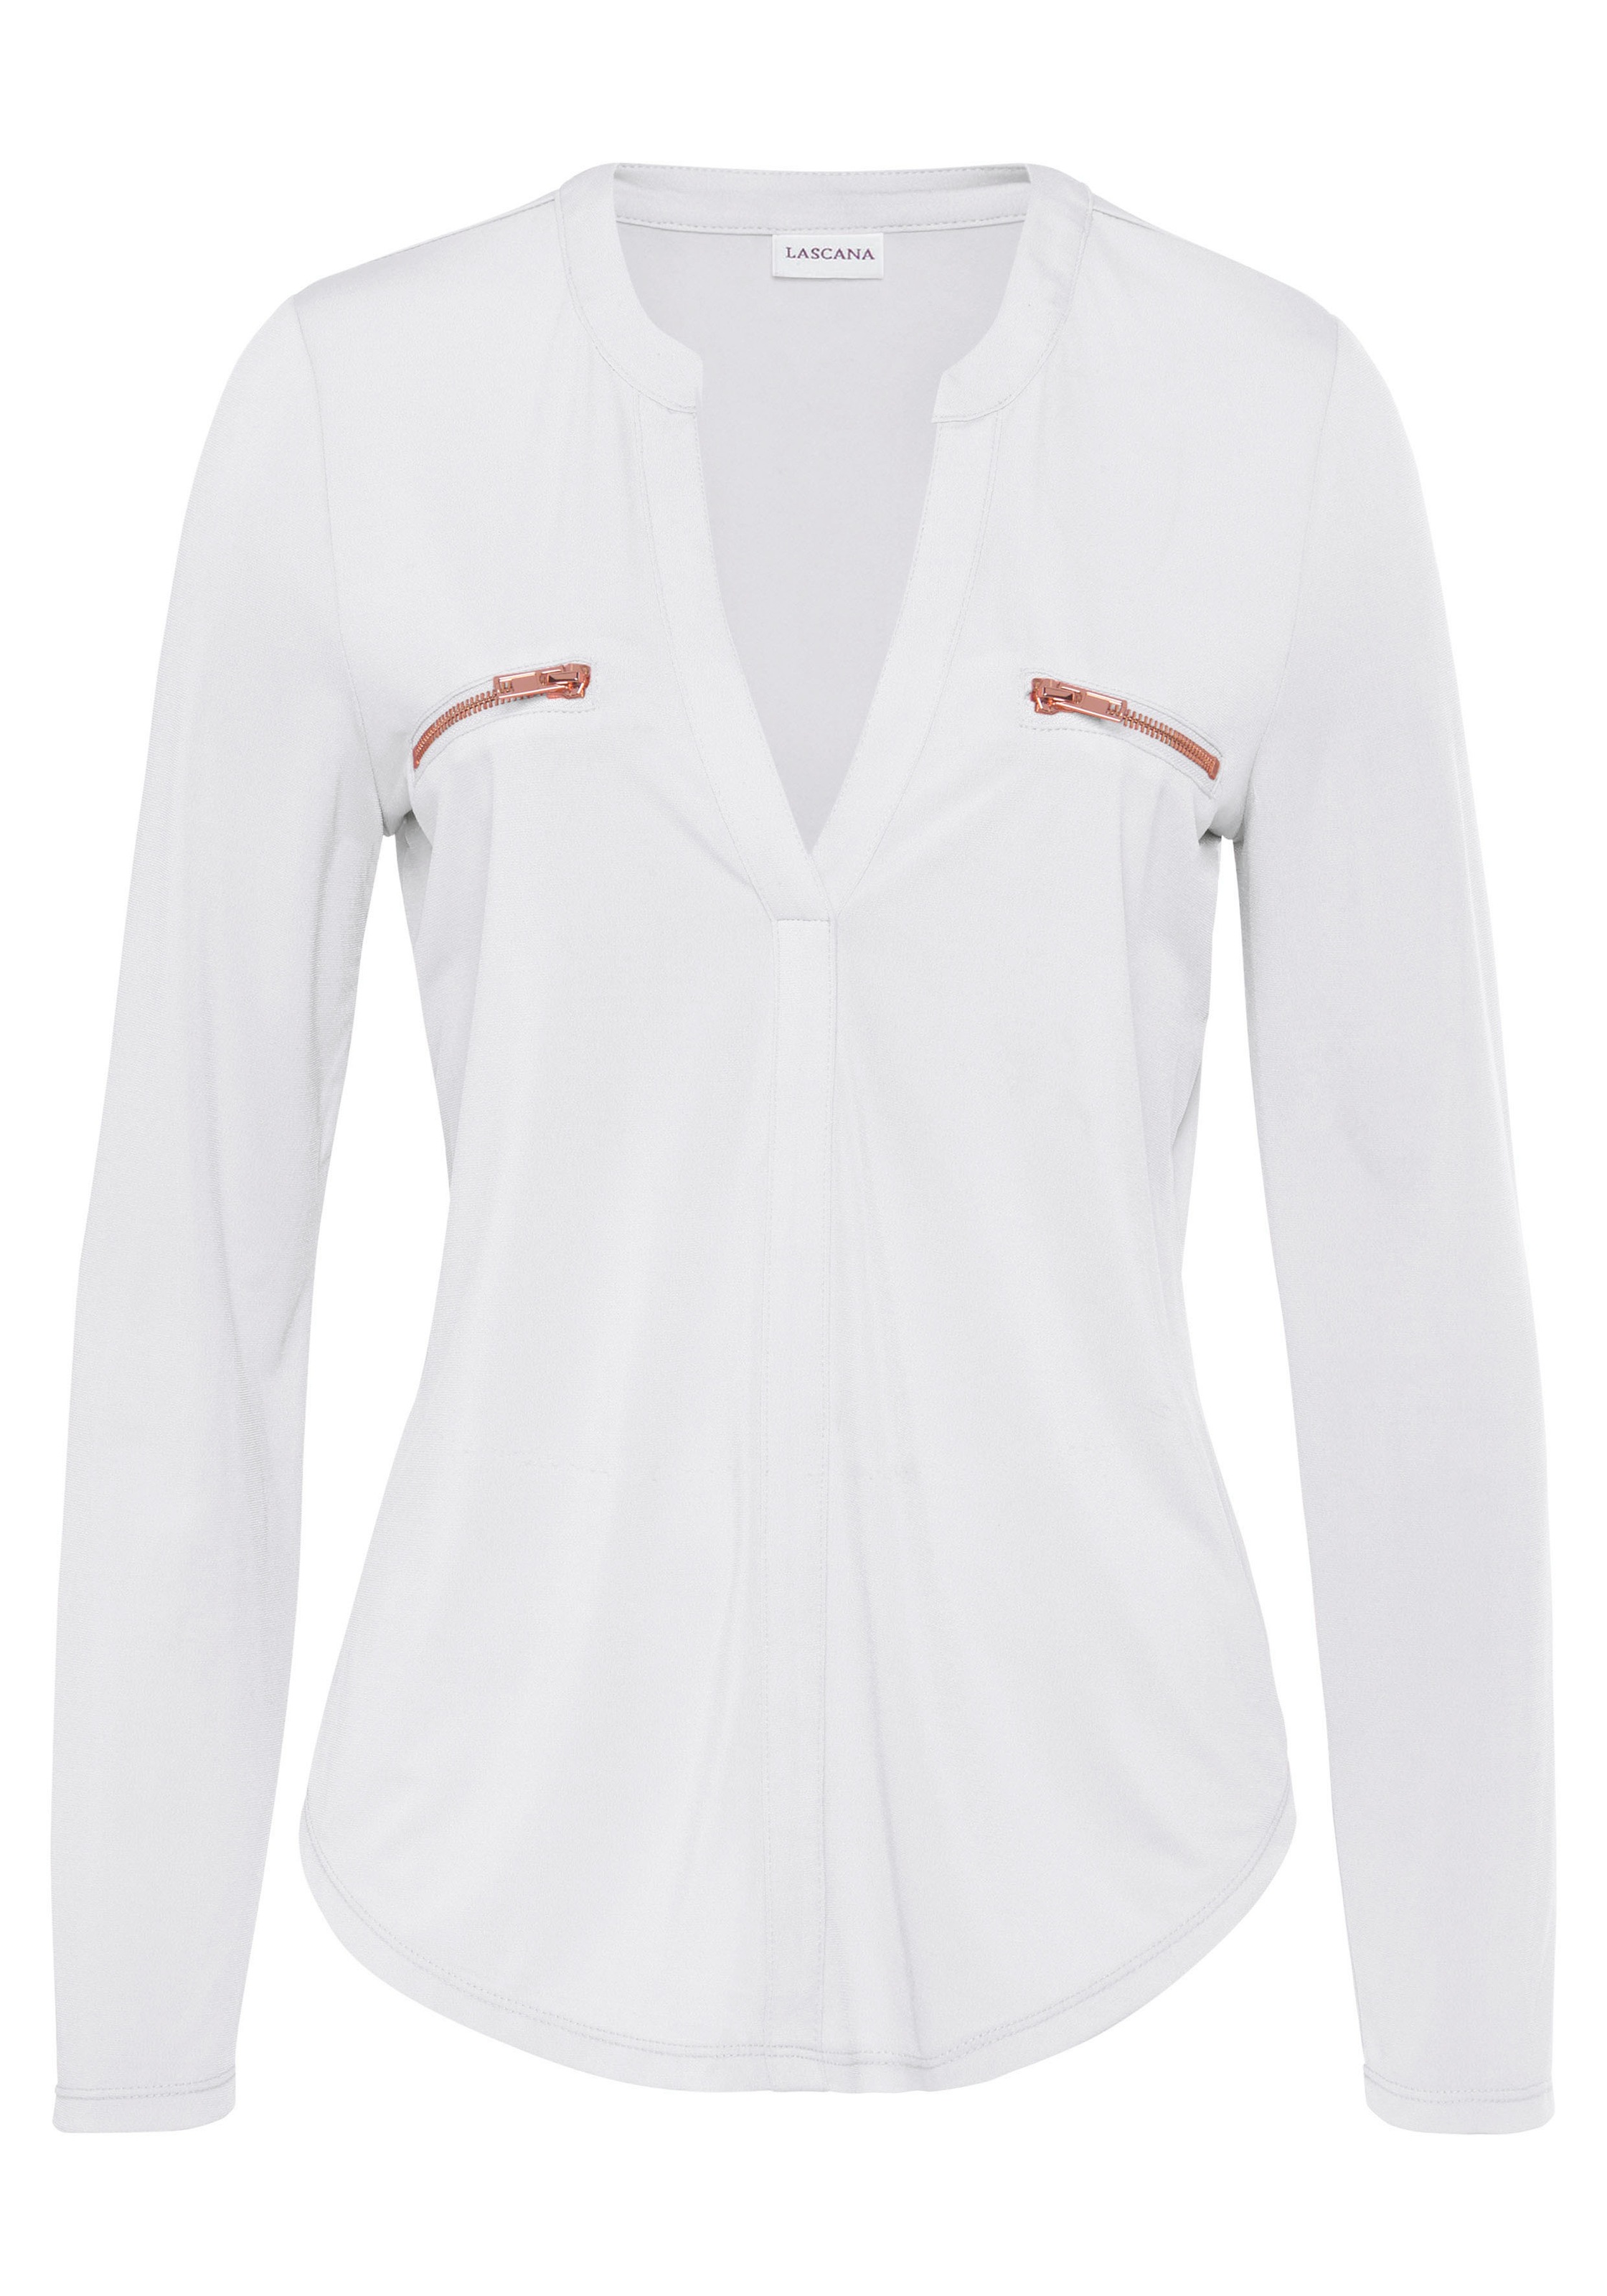 LASCANA Langarmshirt, mit Reissverschlussdetails, Blusenshirt, legere Damenbluse